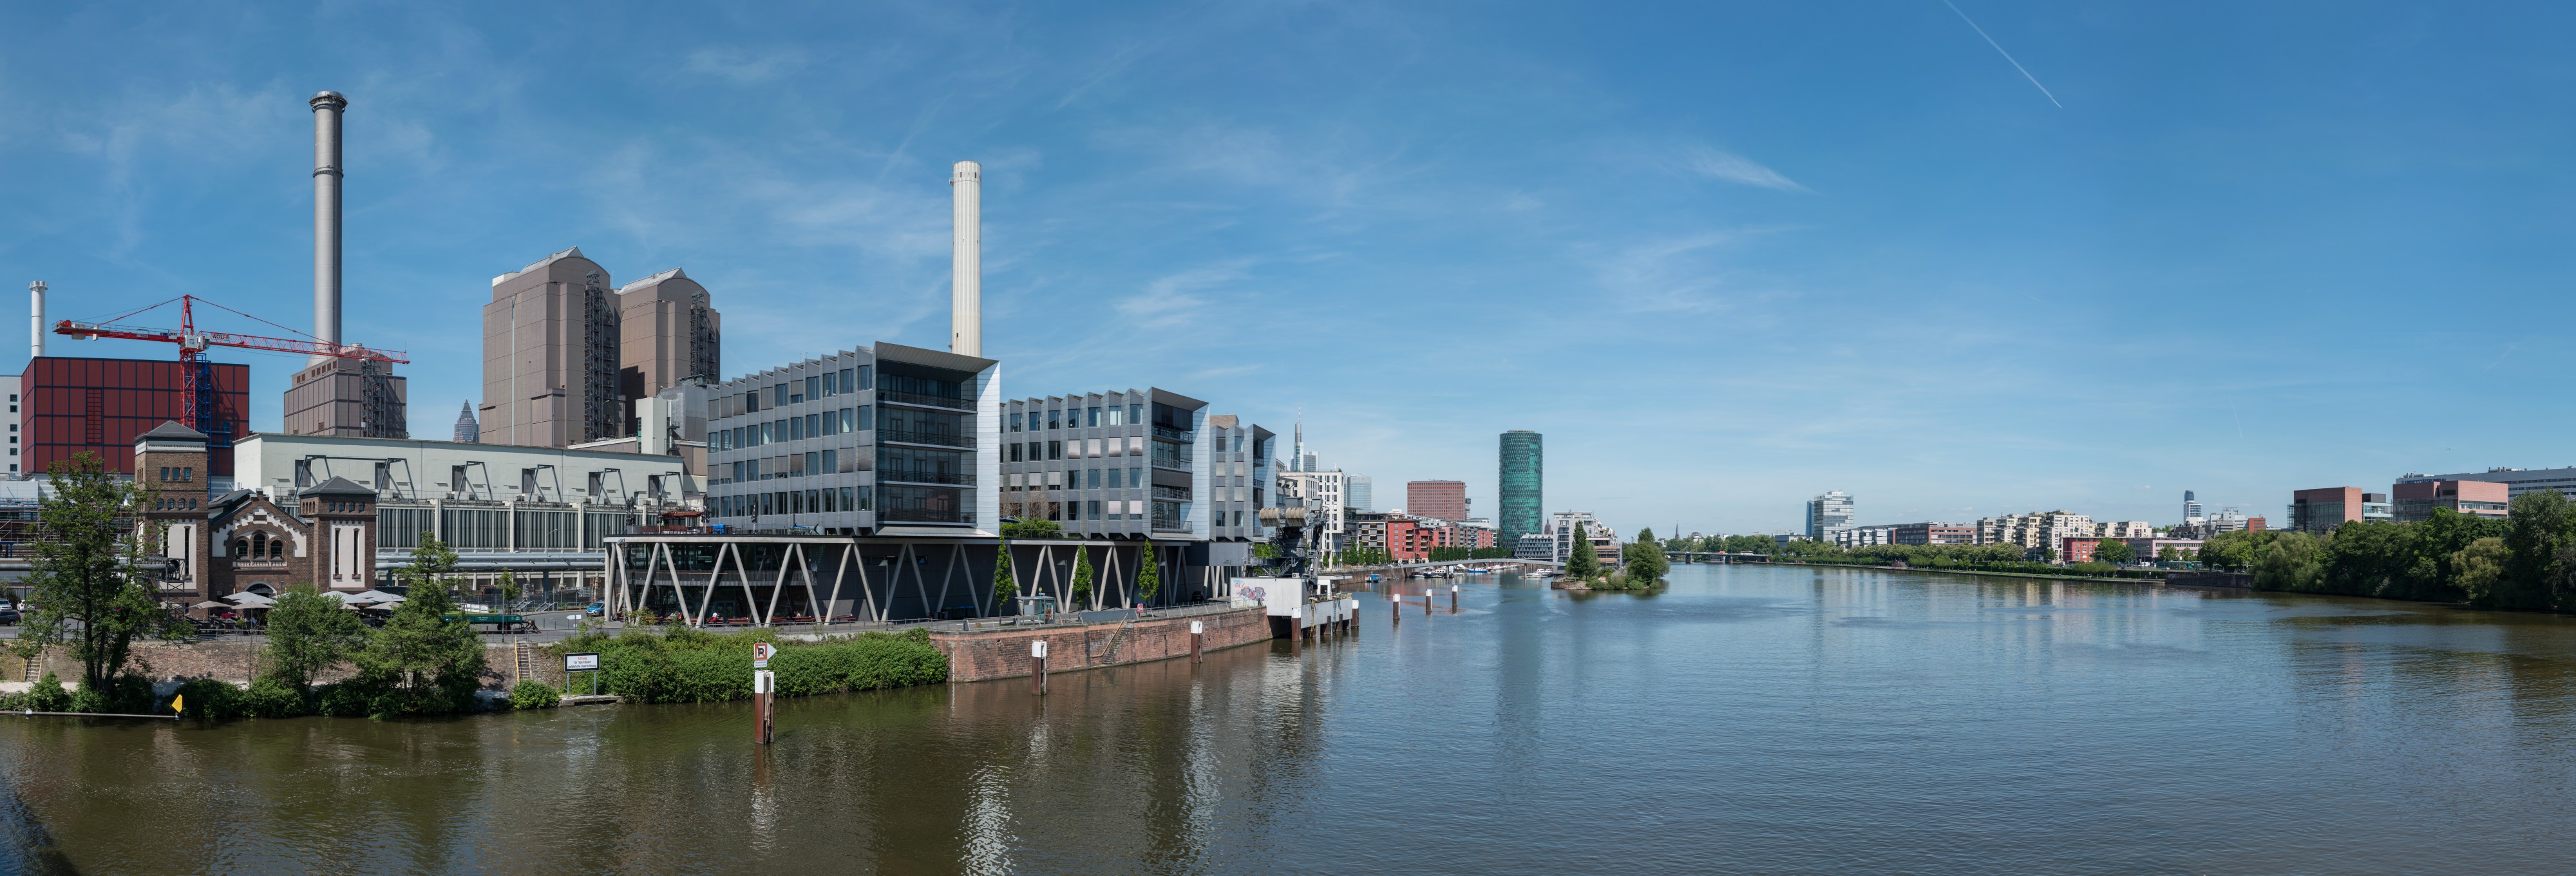 Westhafen and Main river, Frankfurt, Southwest view 20170516 1